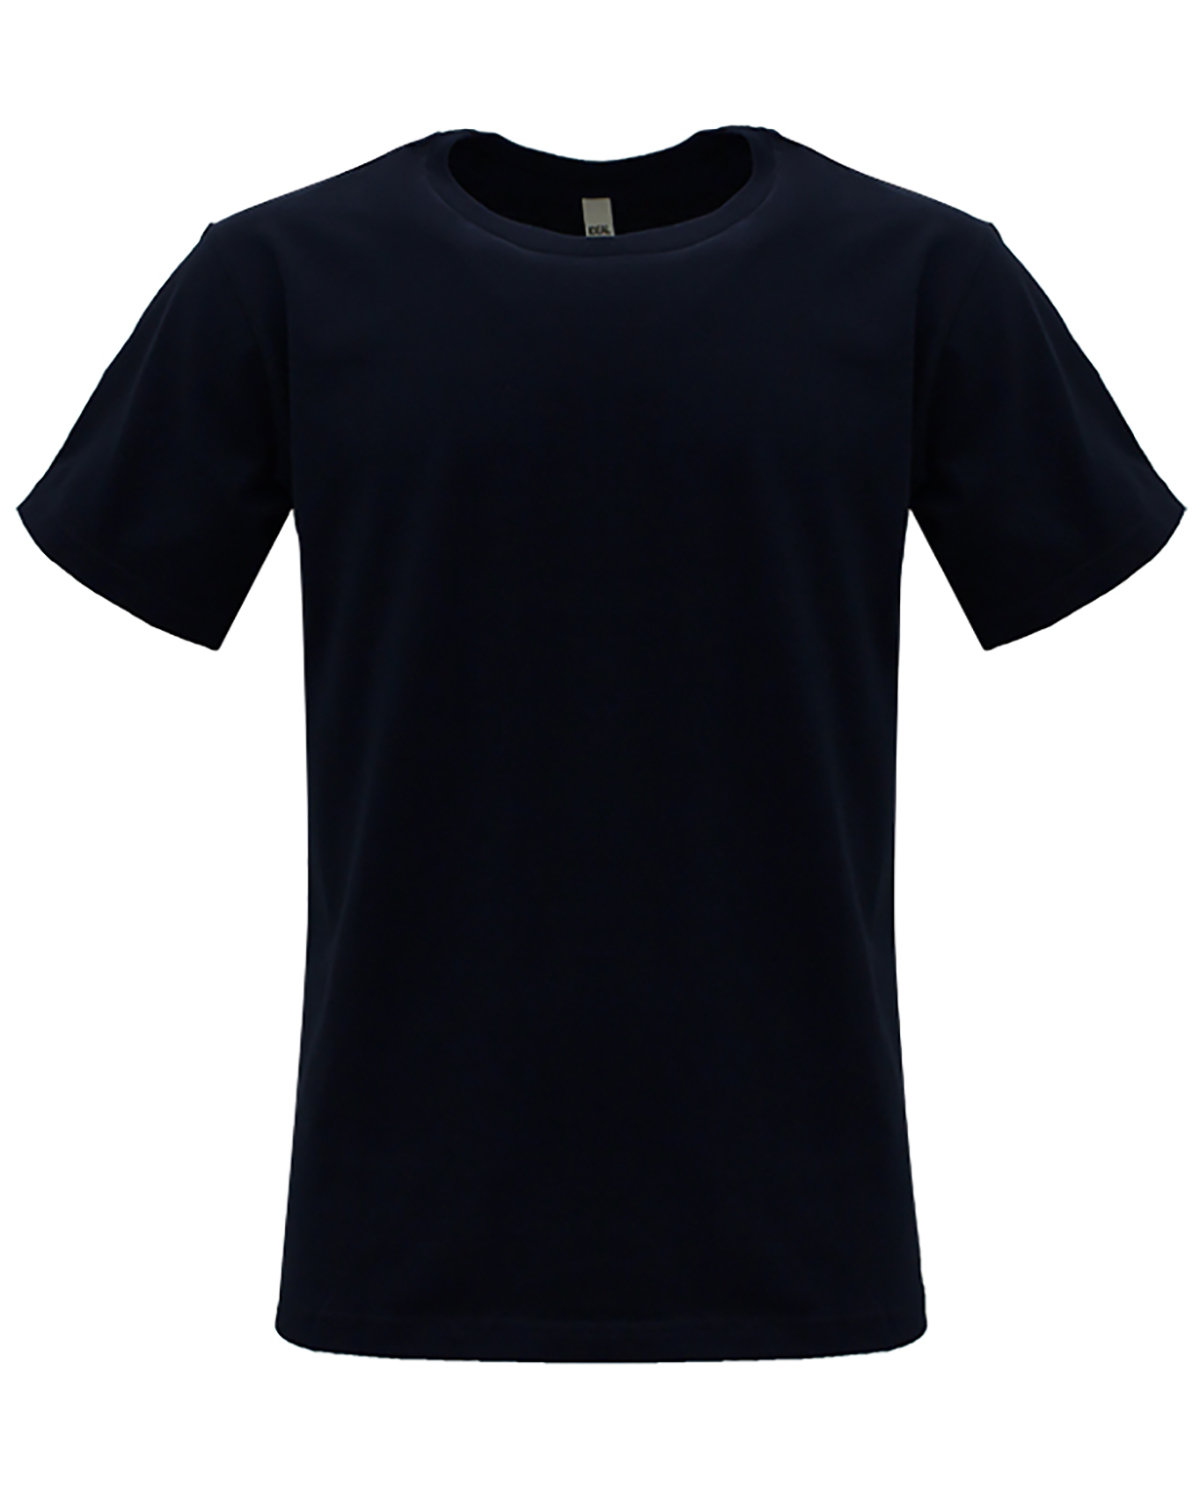 Next Level Apparel Unisex Ideal Heavyweight Cotton Crewneck T-Shirt ...